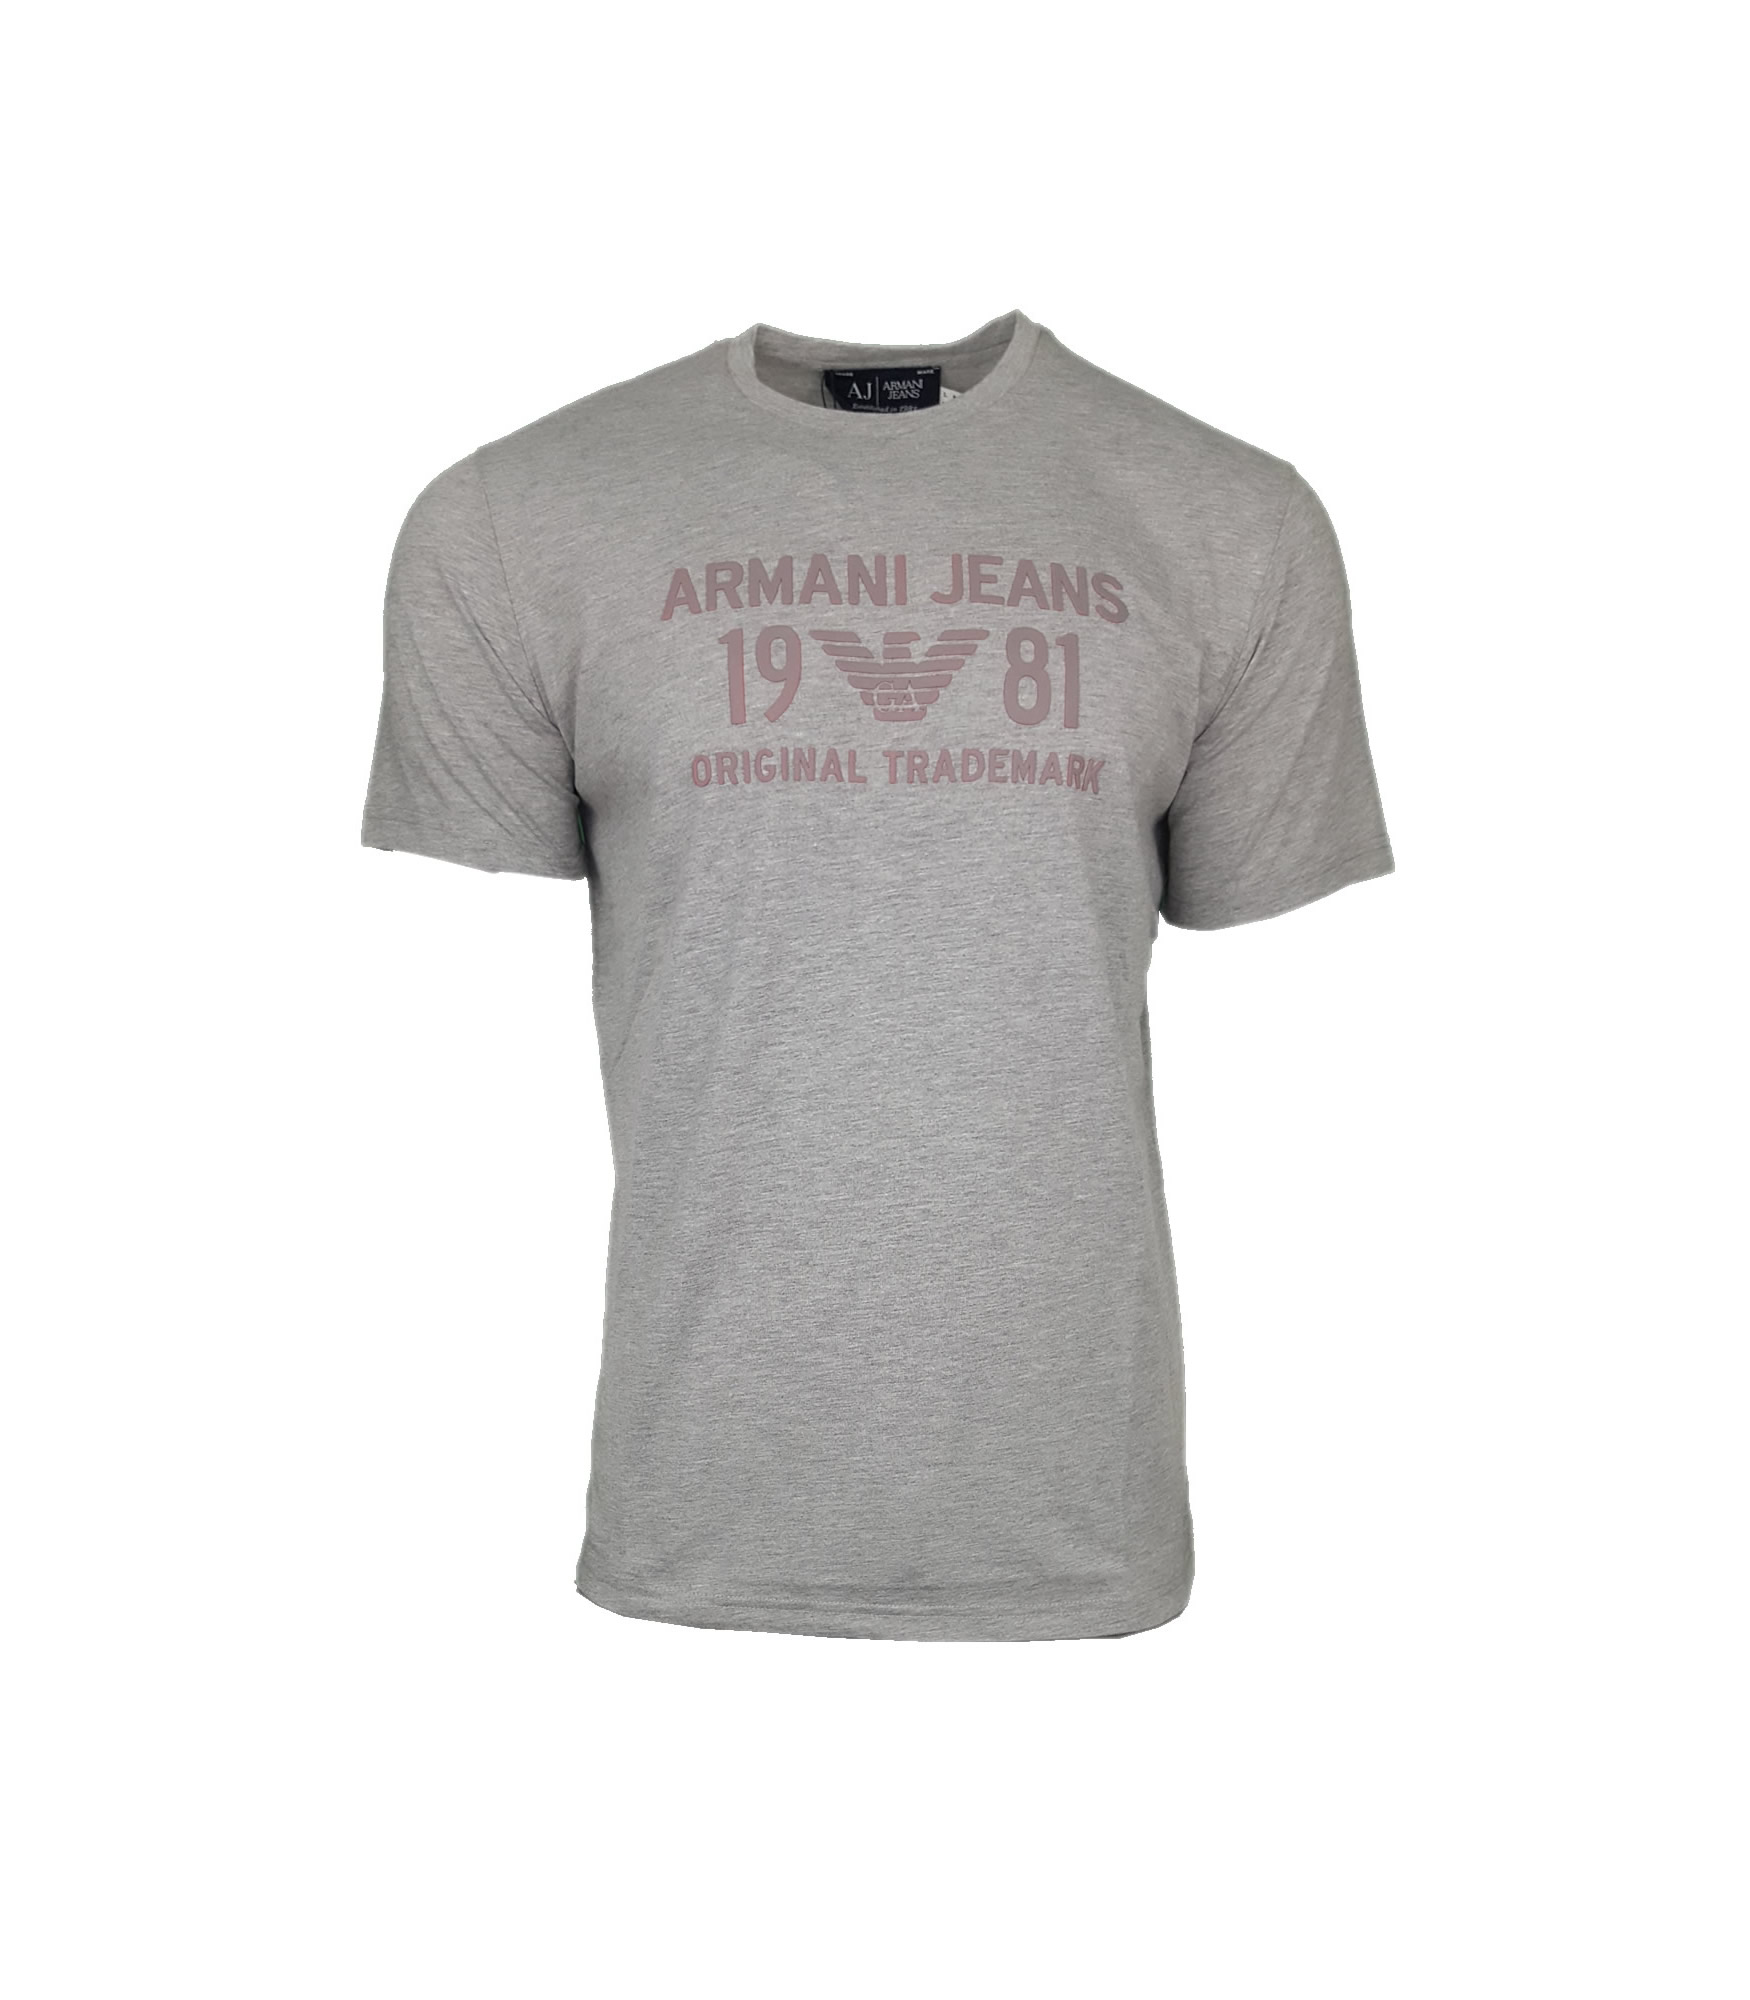 armani 1981 t shirt - 65% OFF 